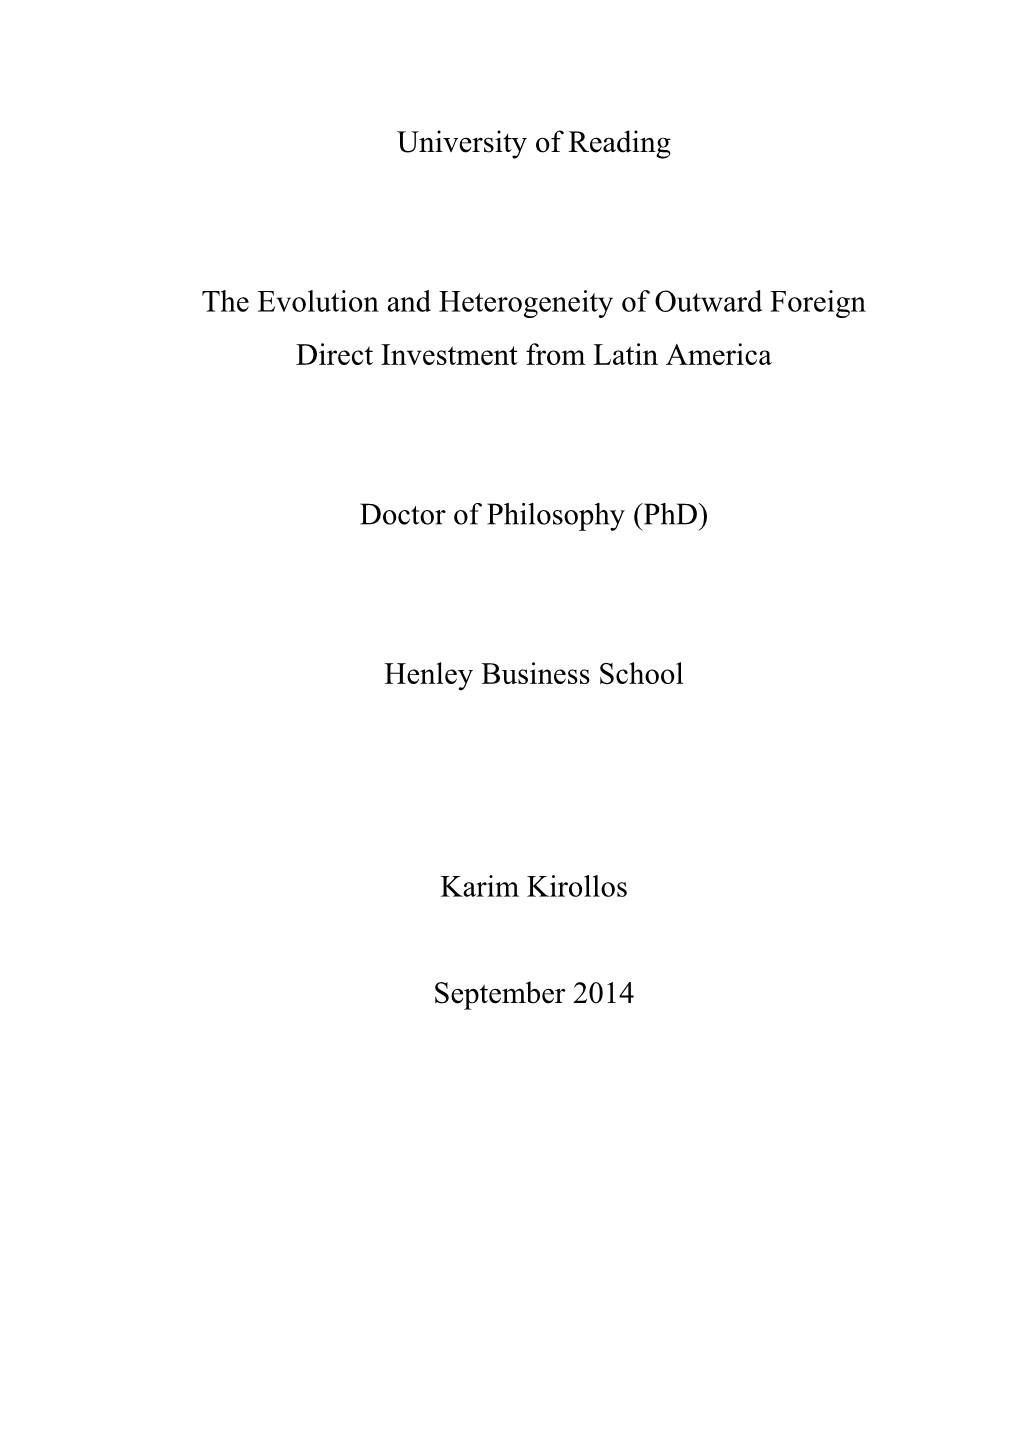 University of Reading the Evolution and Heterogeneity of Outward